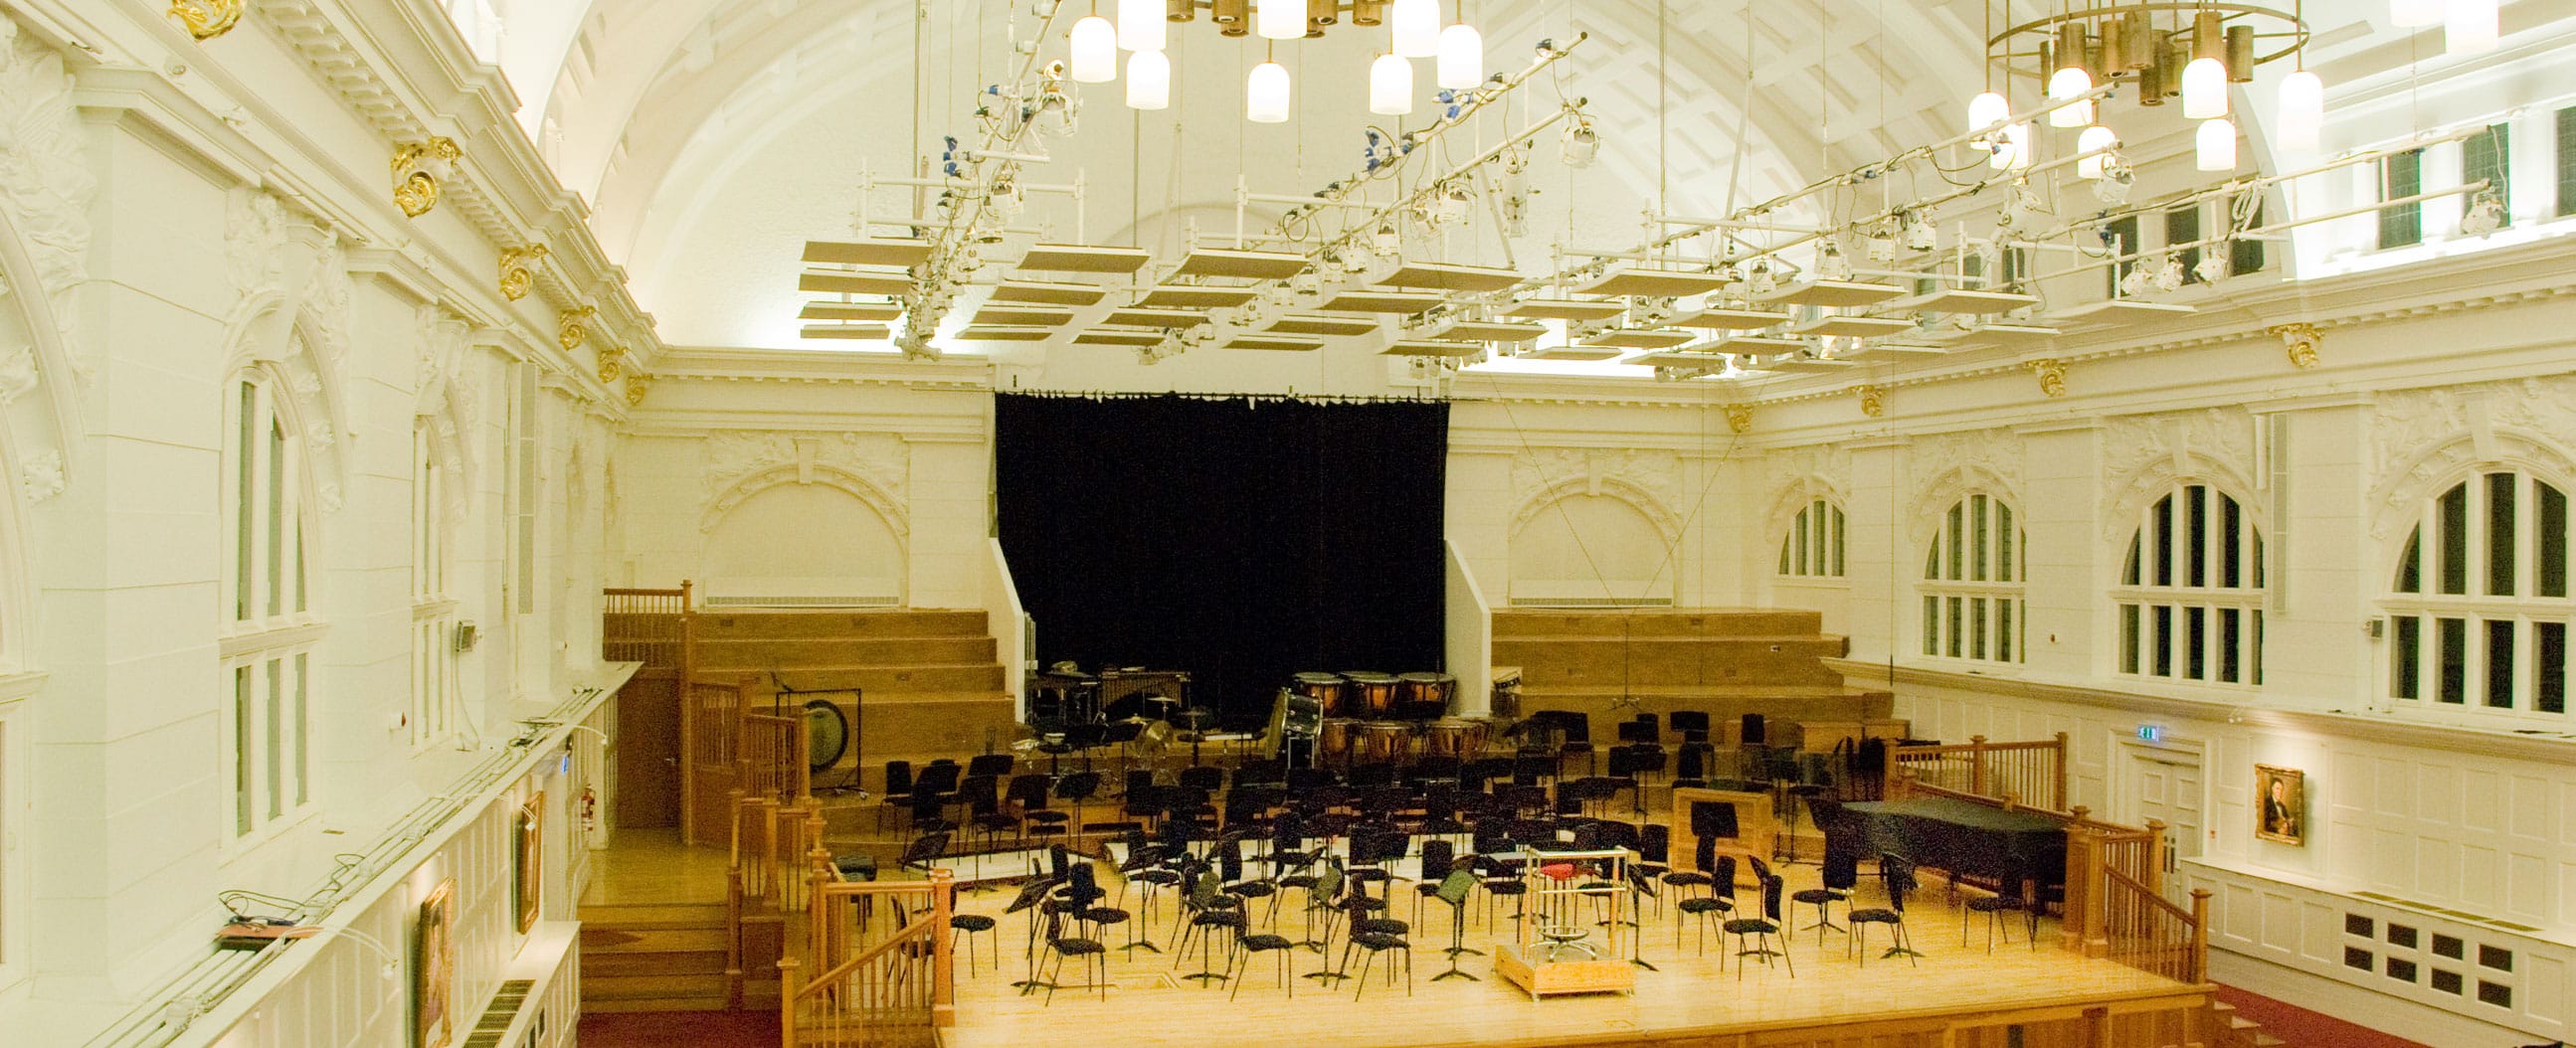 amaryllis fleming concert hall London College of Music